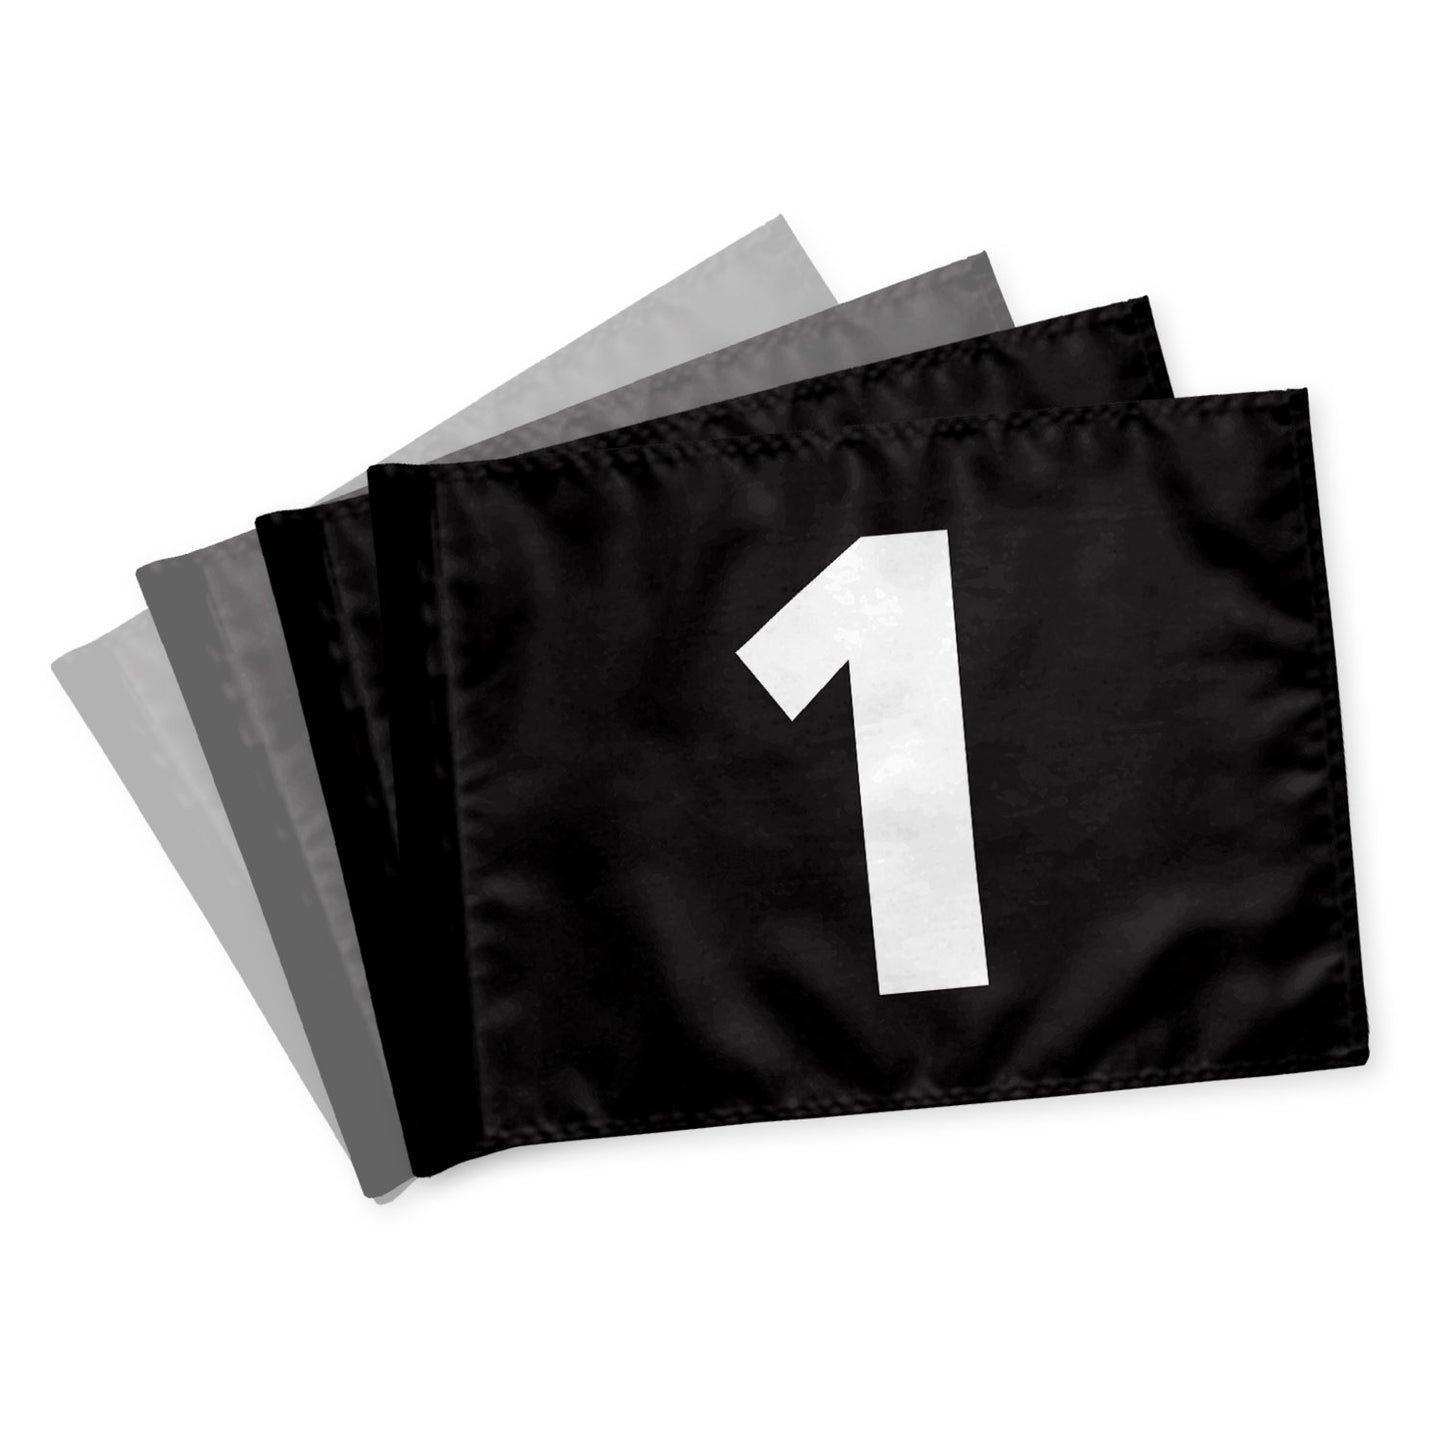 Puttinggreen flagga 1-9, styv, svart med vita siffror, 200 gram flaggduk